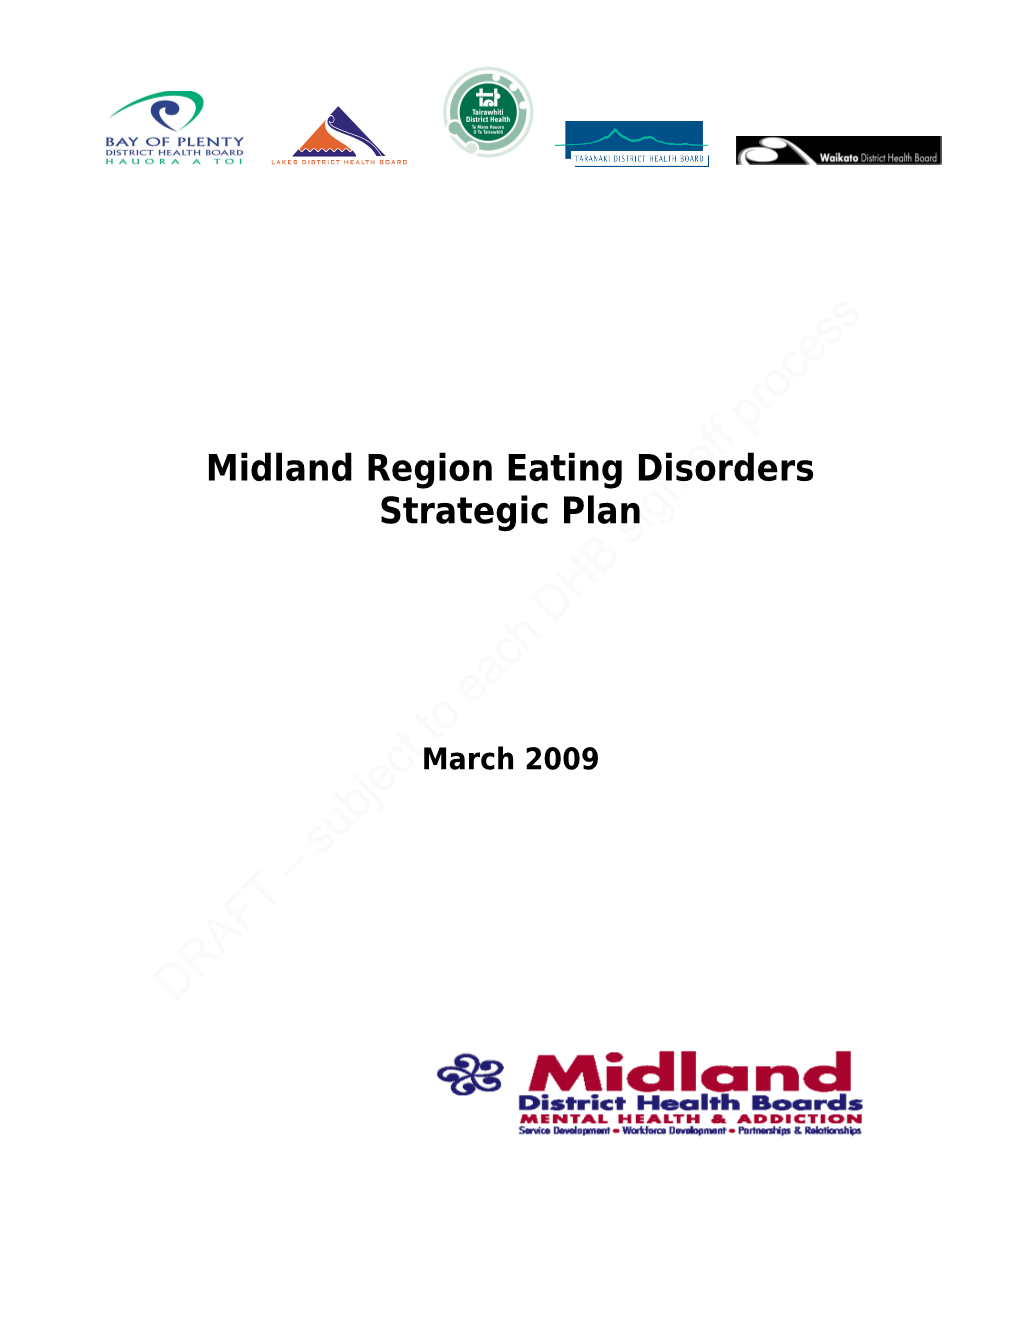 Midland Region Eating Disorders Strategic Plan